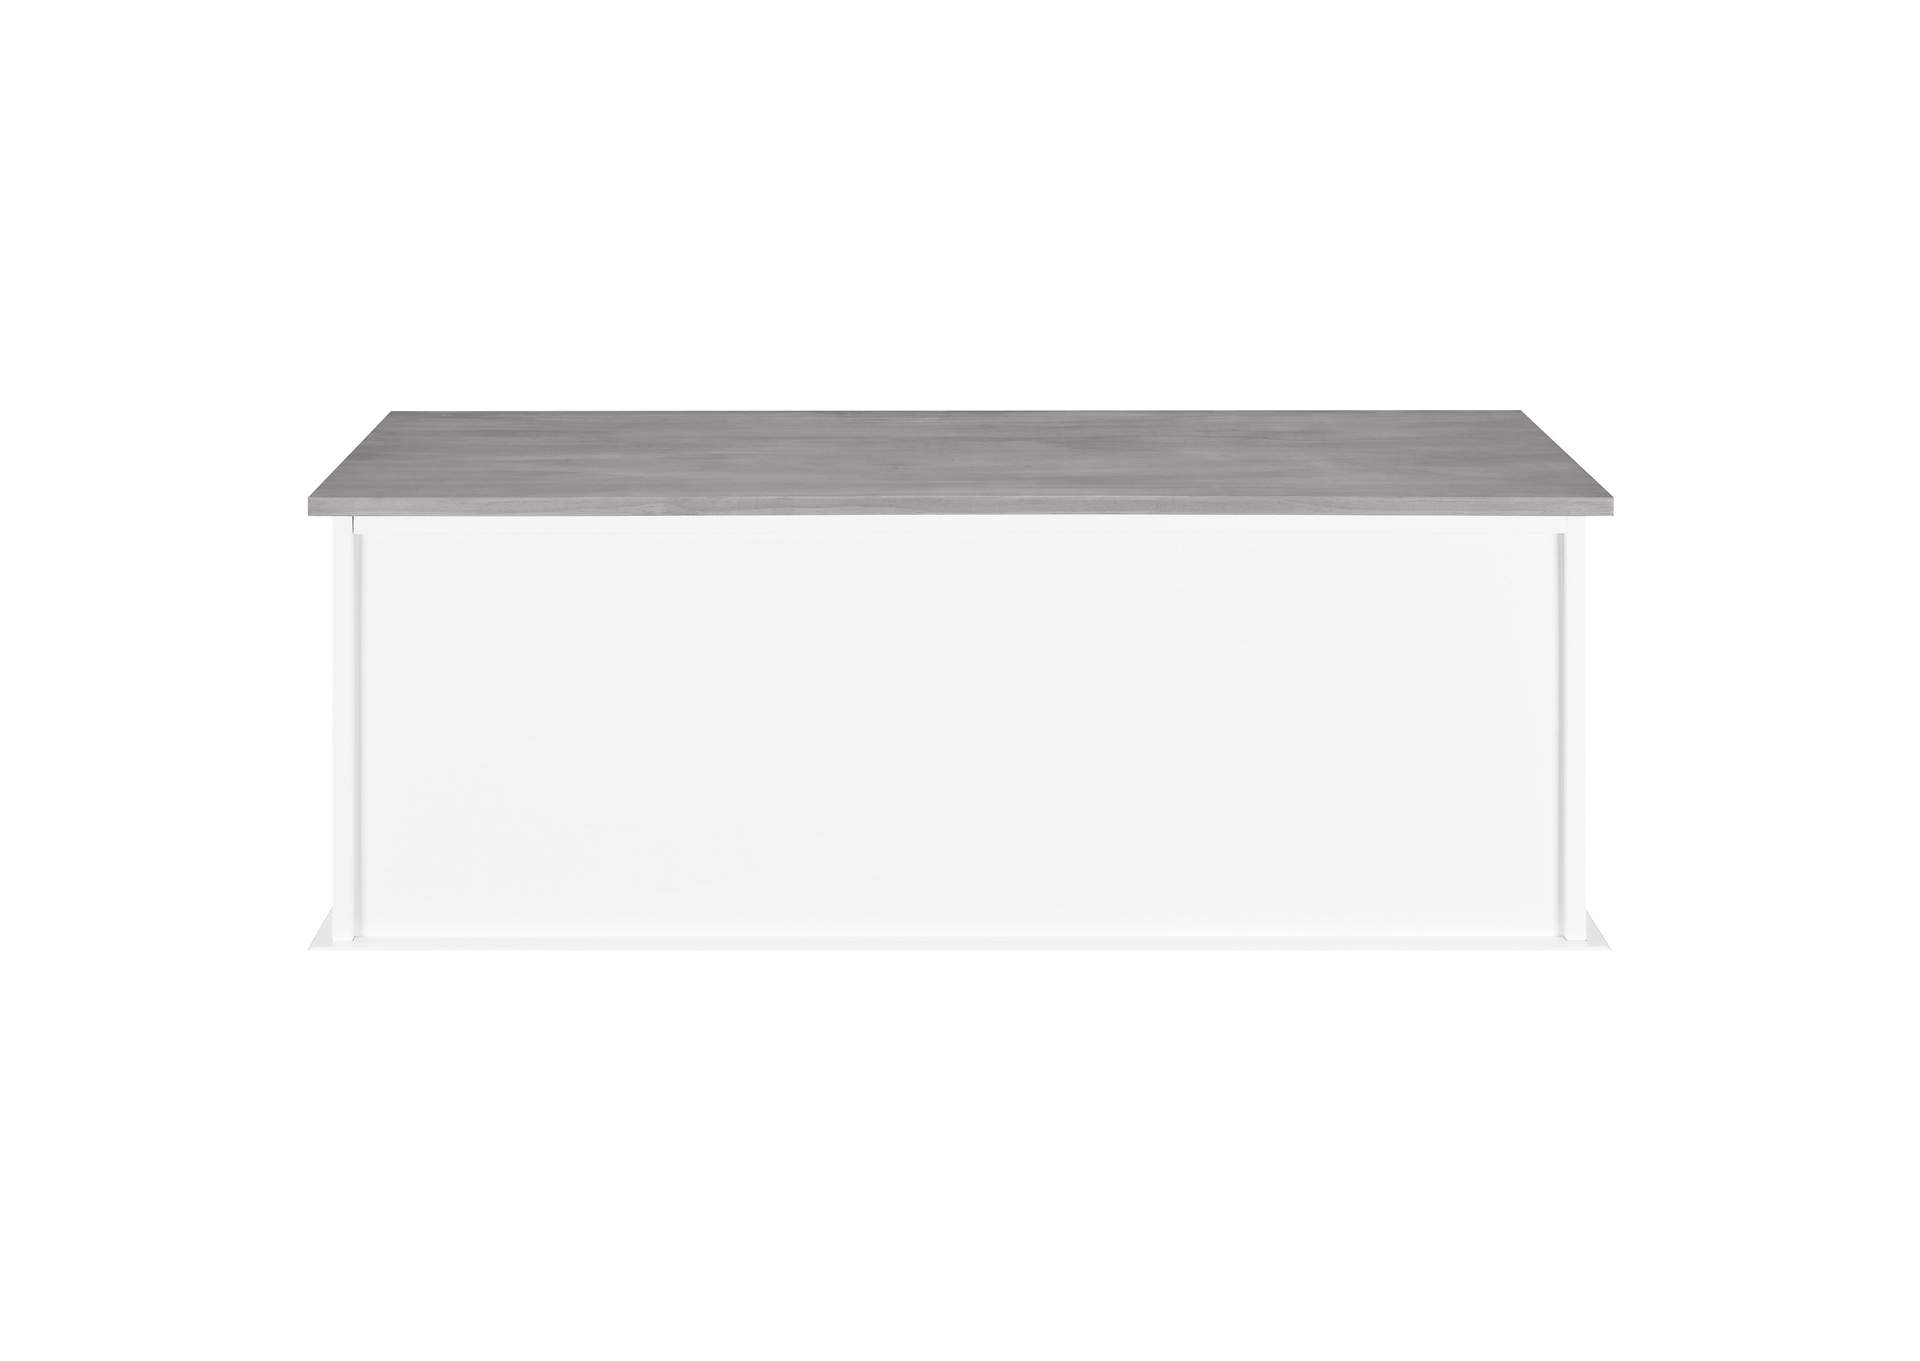 Alma 3-drawer Storage Bench White and Weathered Grey,Coaster Furniture